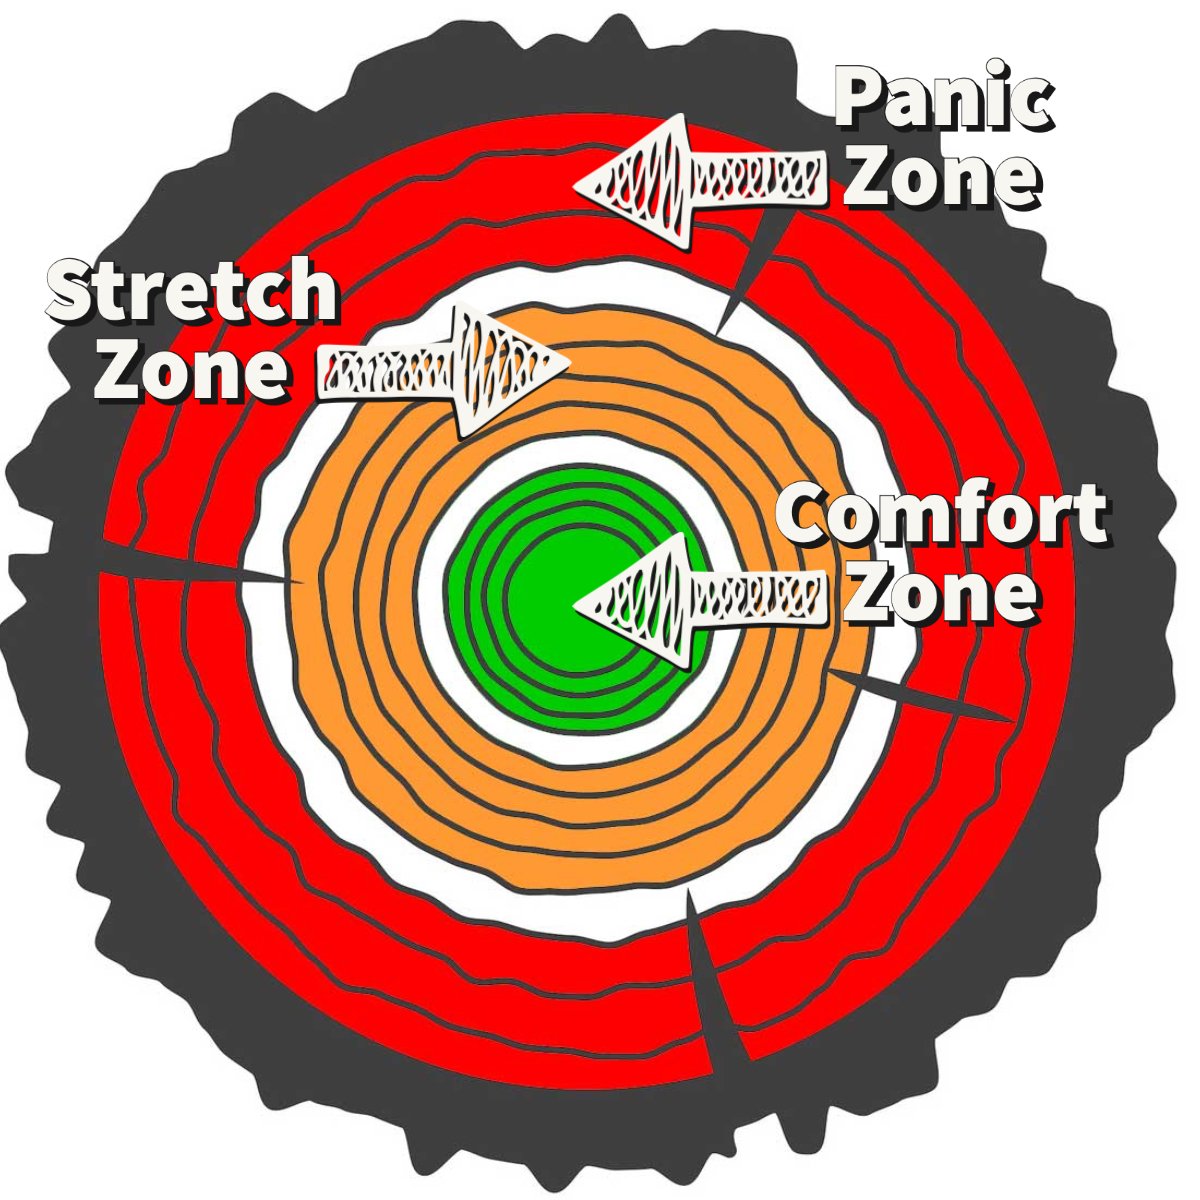 Develop the Comfort Zone